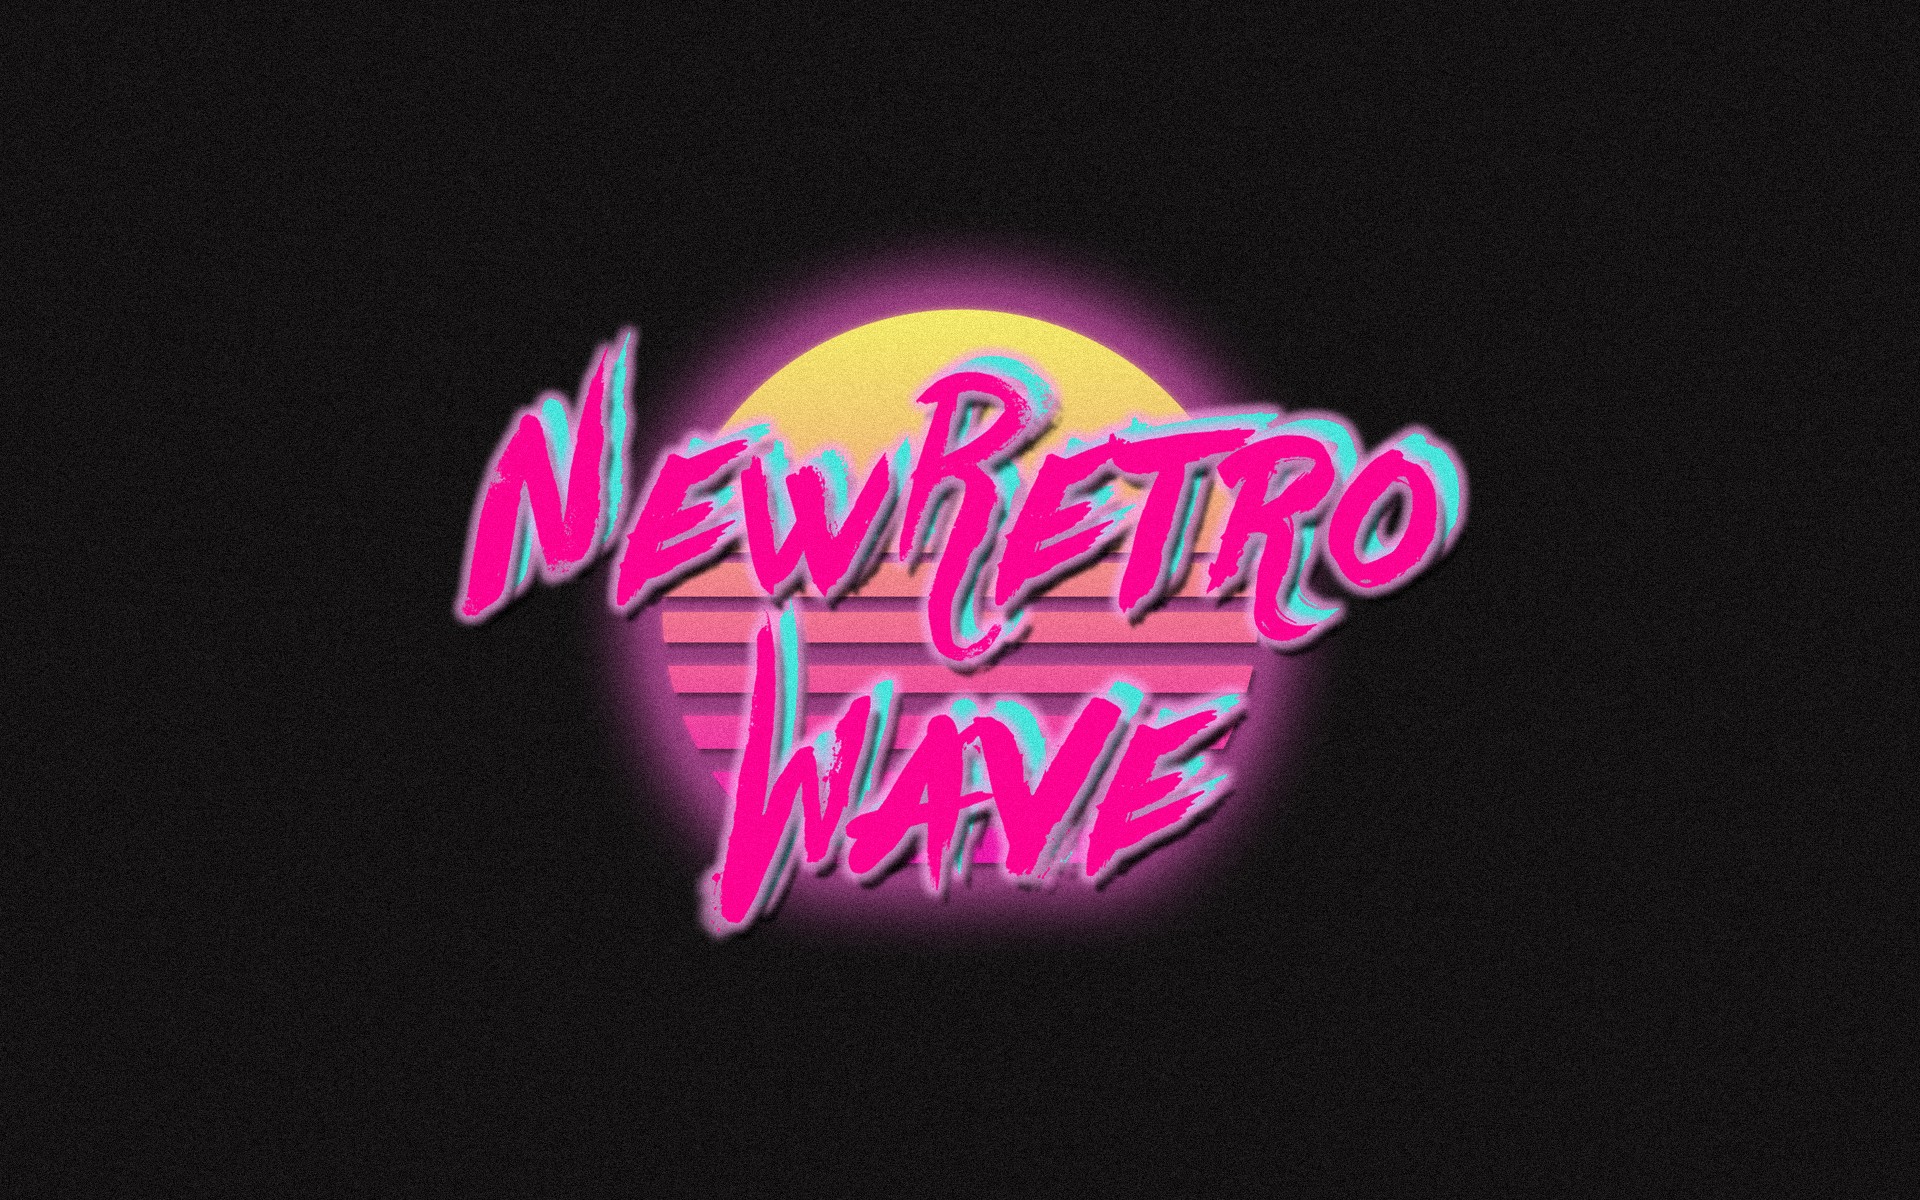 General 1920x1200 New Retro Wave neon 1980s vintage retro games synthwave digital art simple background